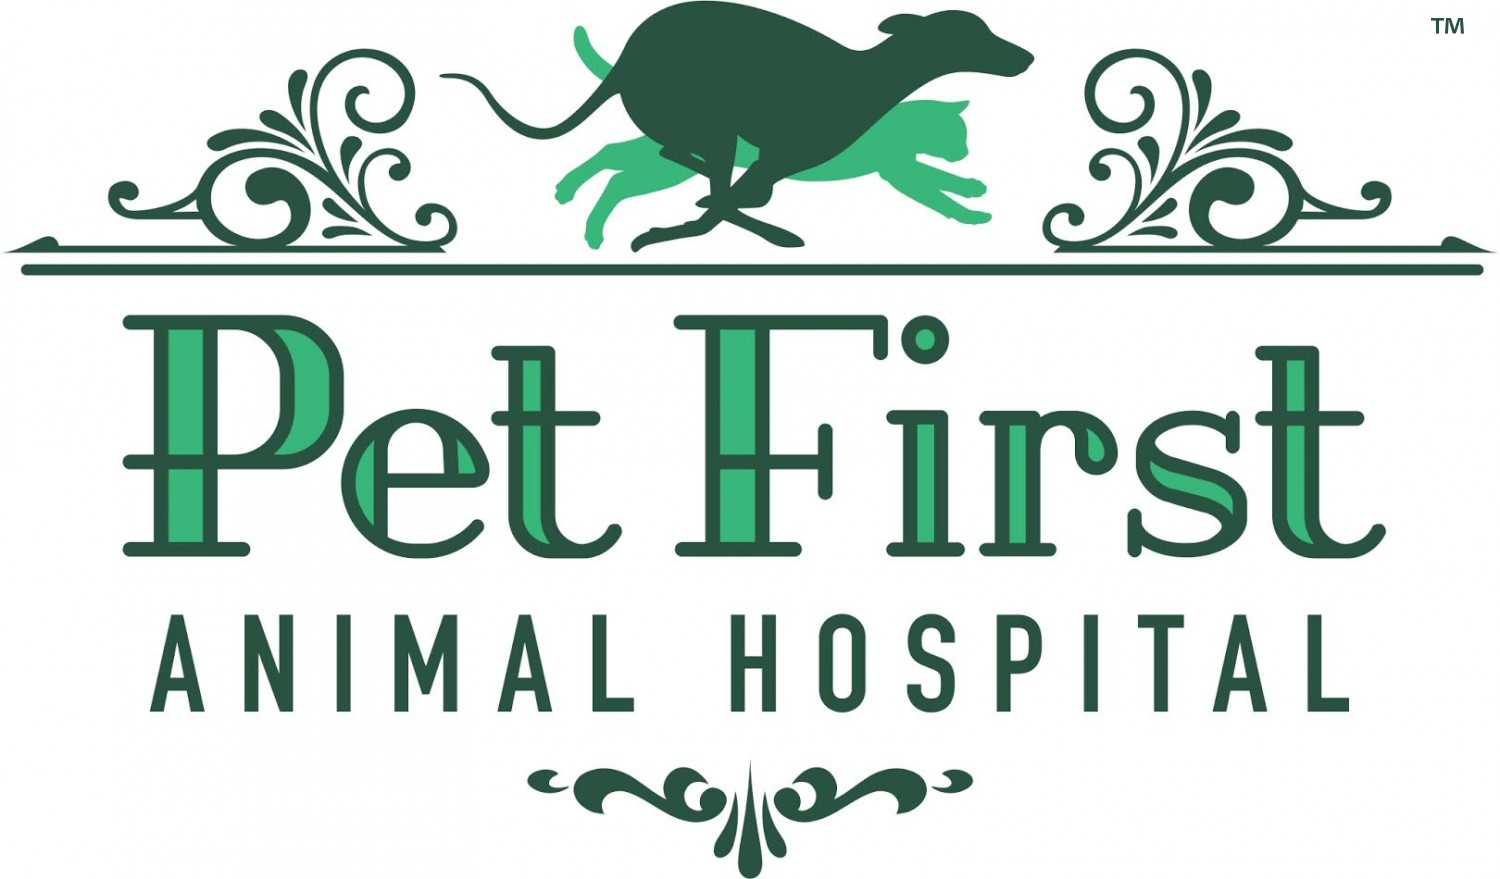 Pet First Animal Hospital - Veterinarian serving Bradenton, Myakka City,  Lakewood Ranch, Ellenton, Palmetto, Parrish, Oneco, Samoset, and Sarasota  for over 30 years!